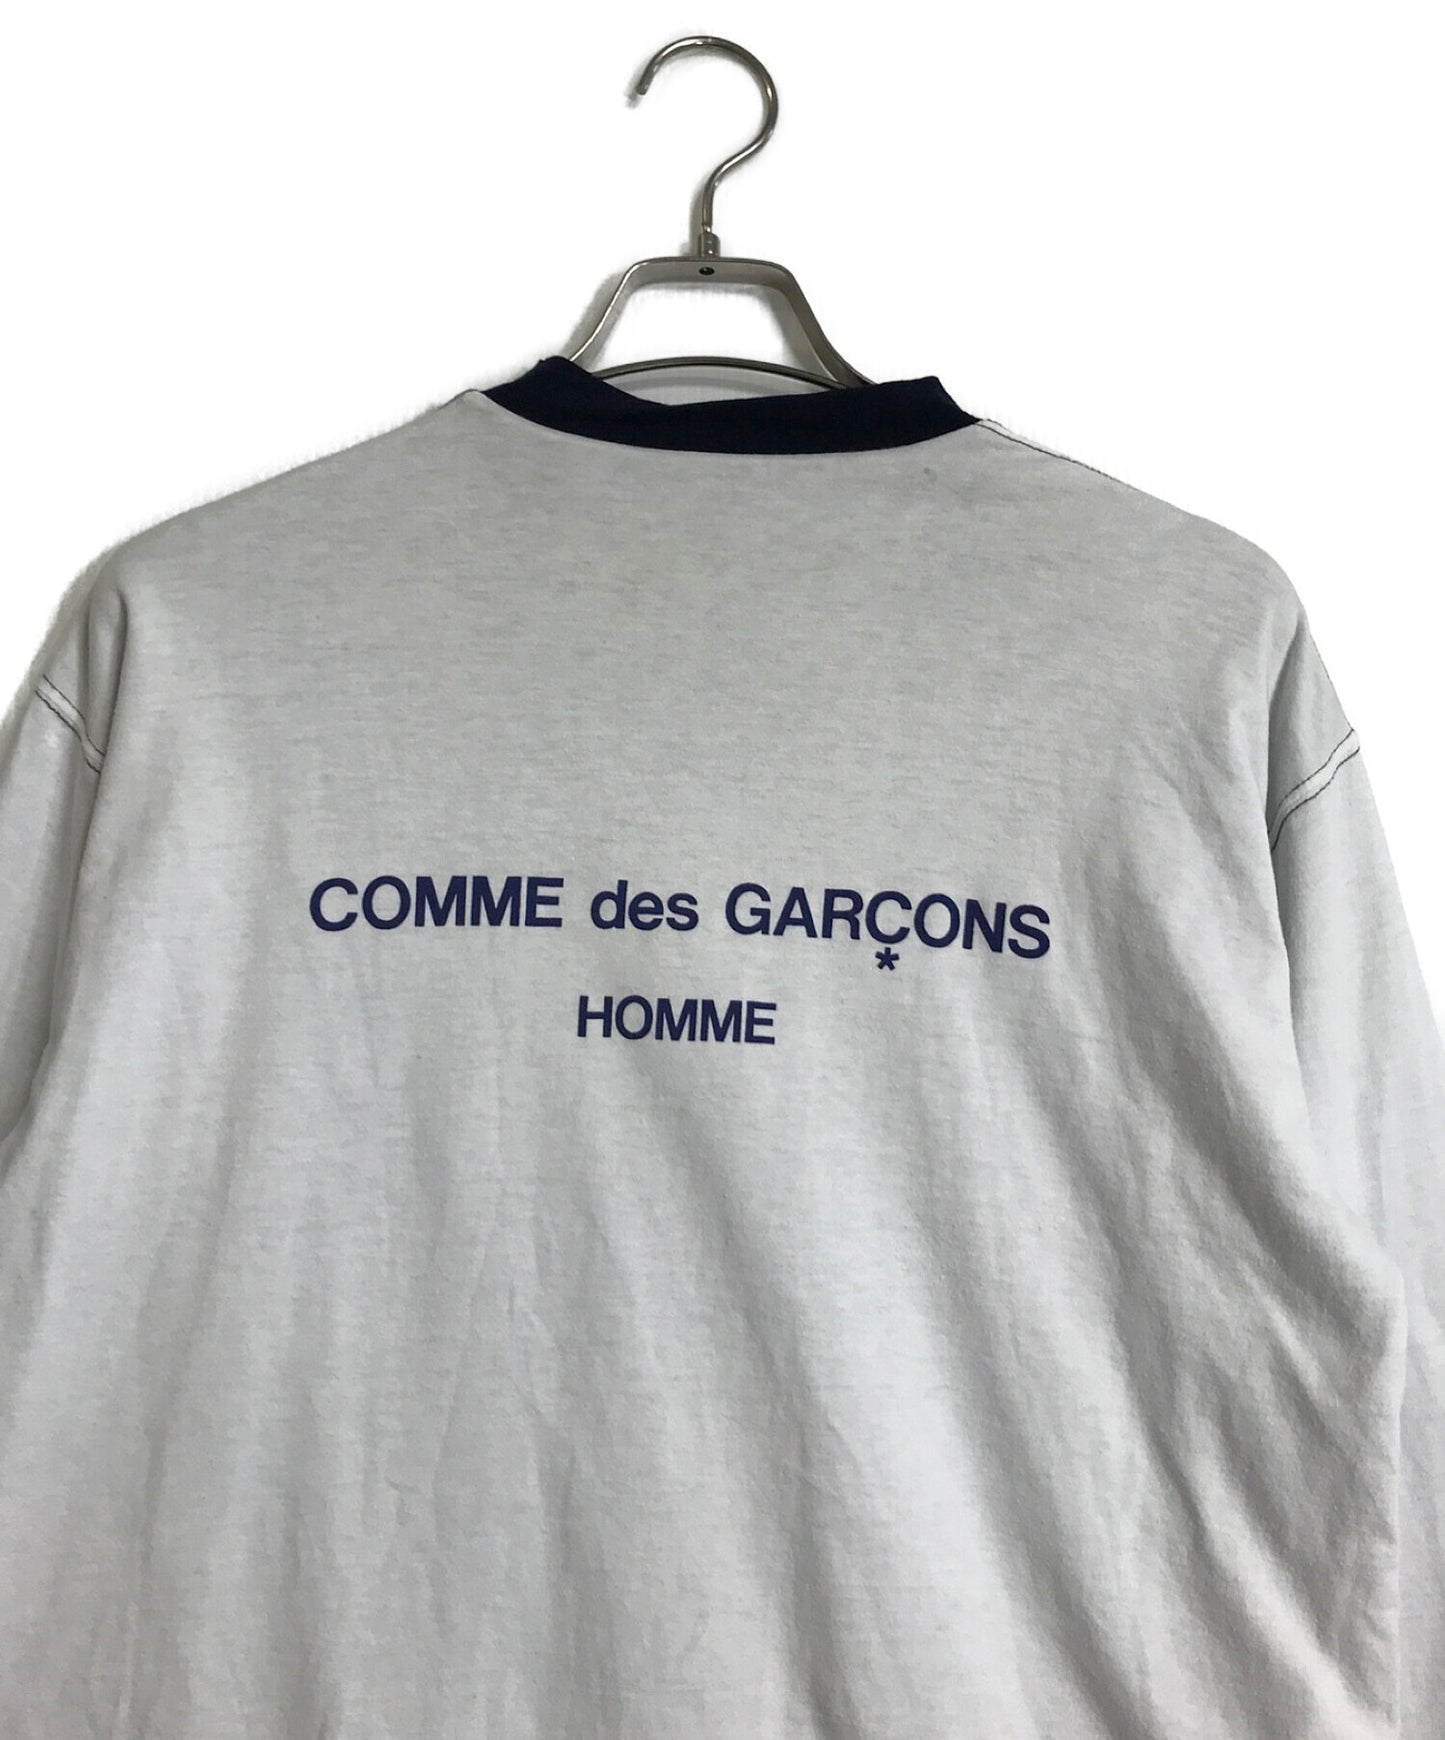 COMME DES GARCONS HOMME 90的可逆徽標編織切割和縫製ht-040280